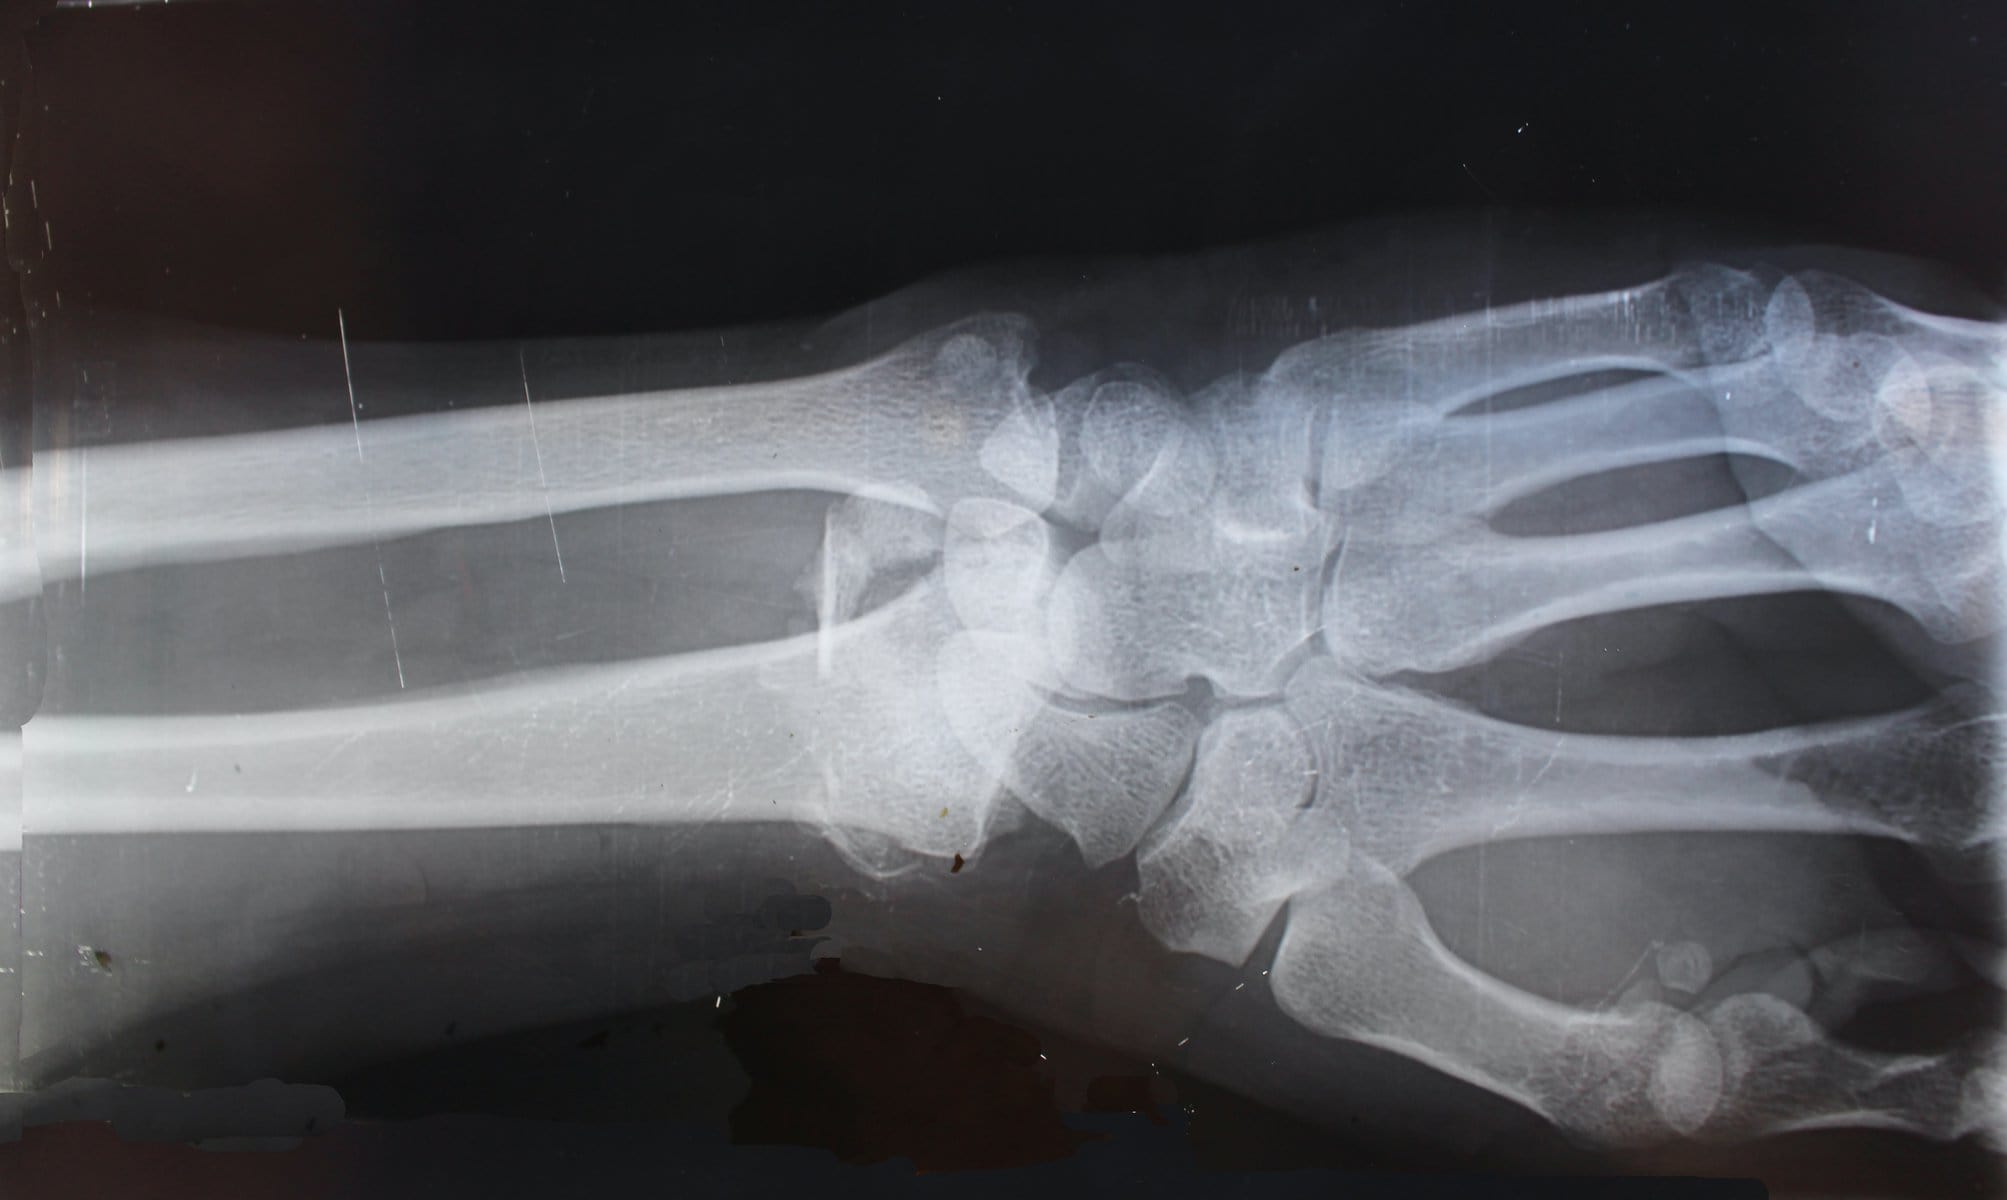 wrist X-ray investigating osteoarthritis